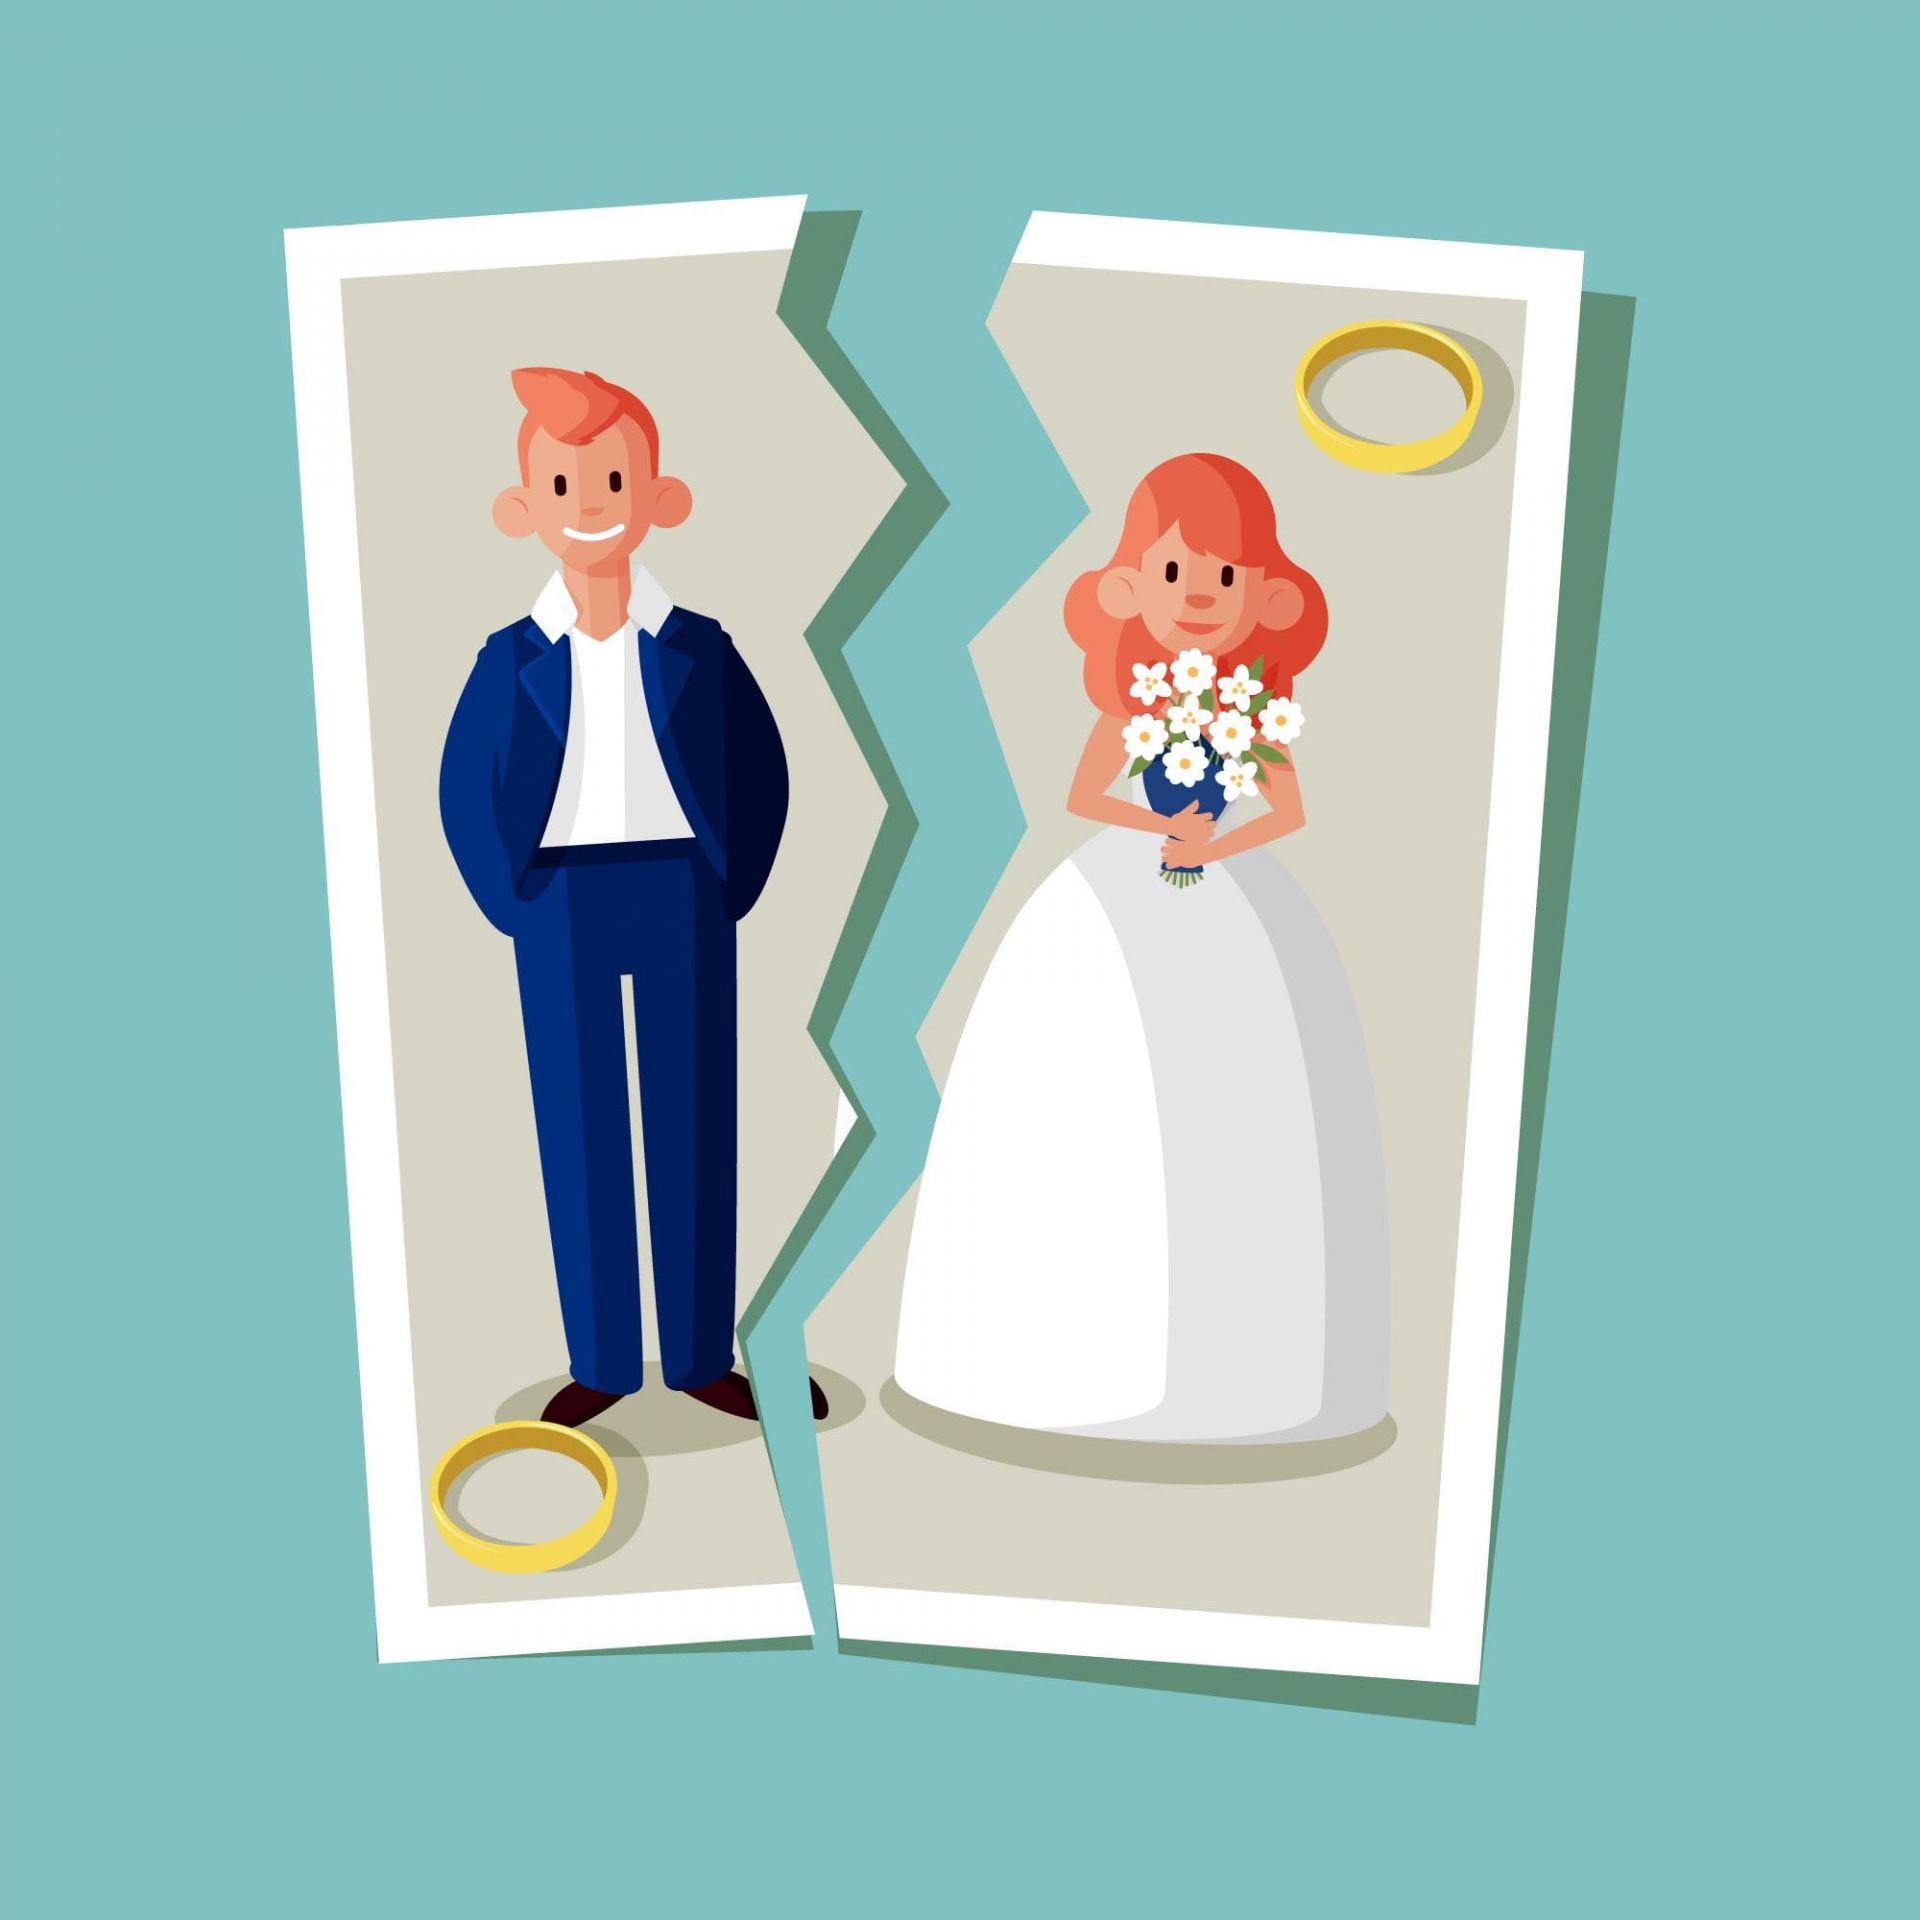 ptt marriage如何建立和維持一個健康和幸福的婚姻關係？